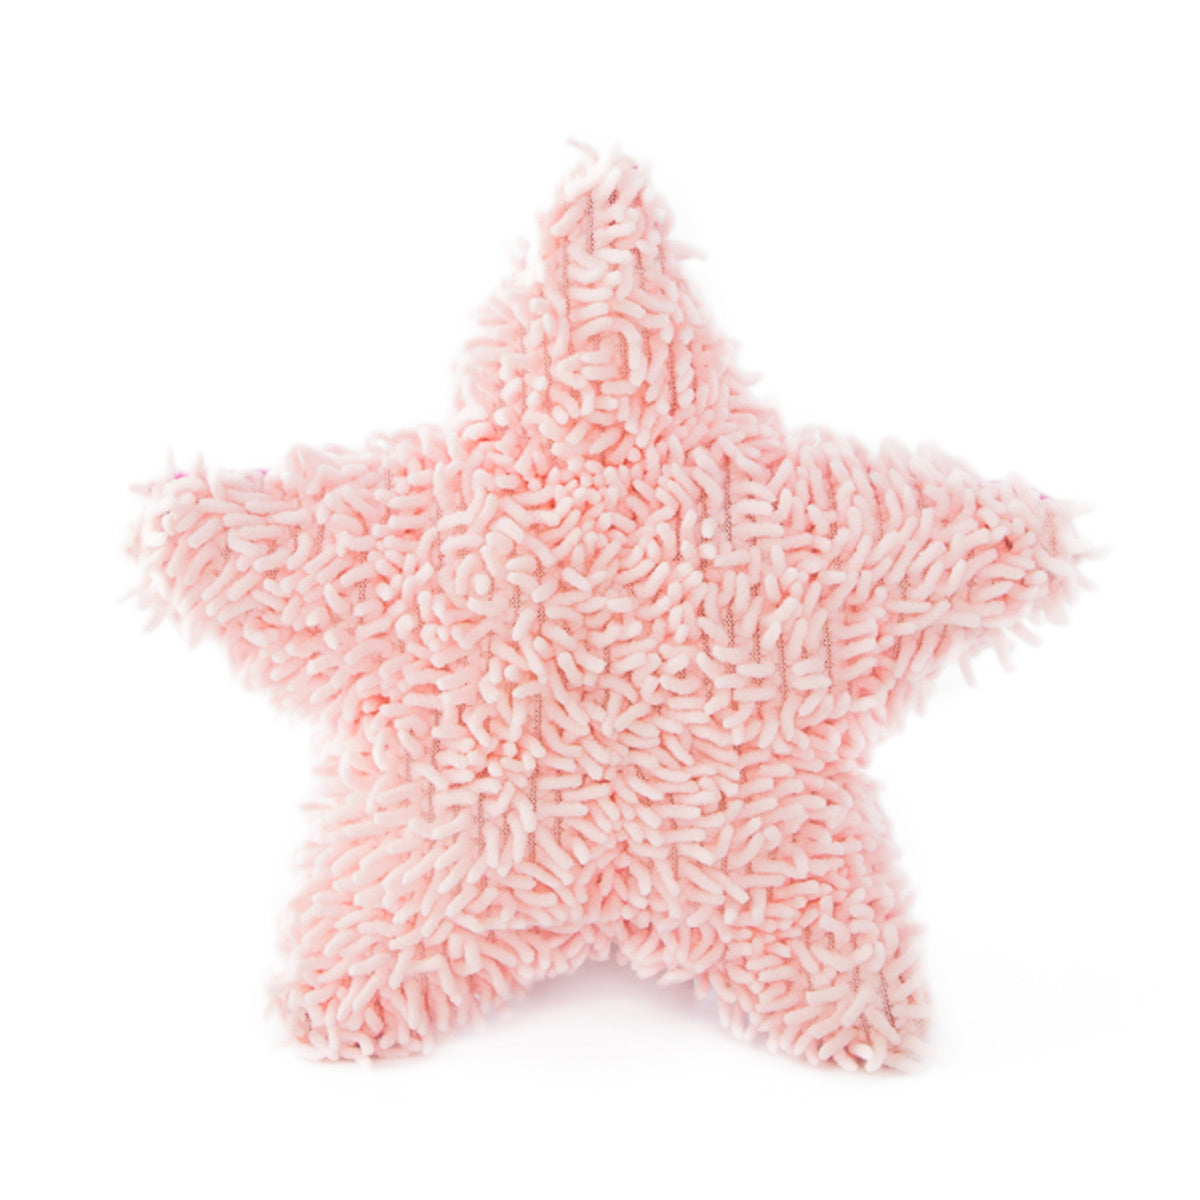 ZIPPY PAWS - Starla the Starfish Storybook Mermaid Plush Toy